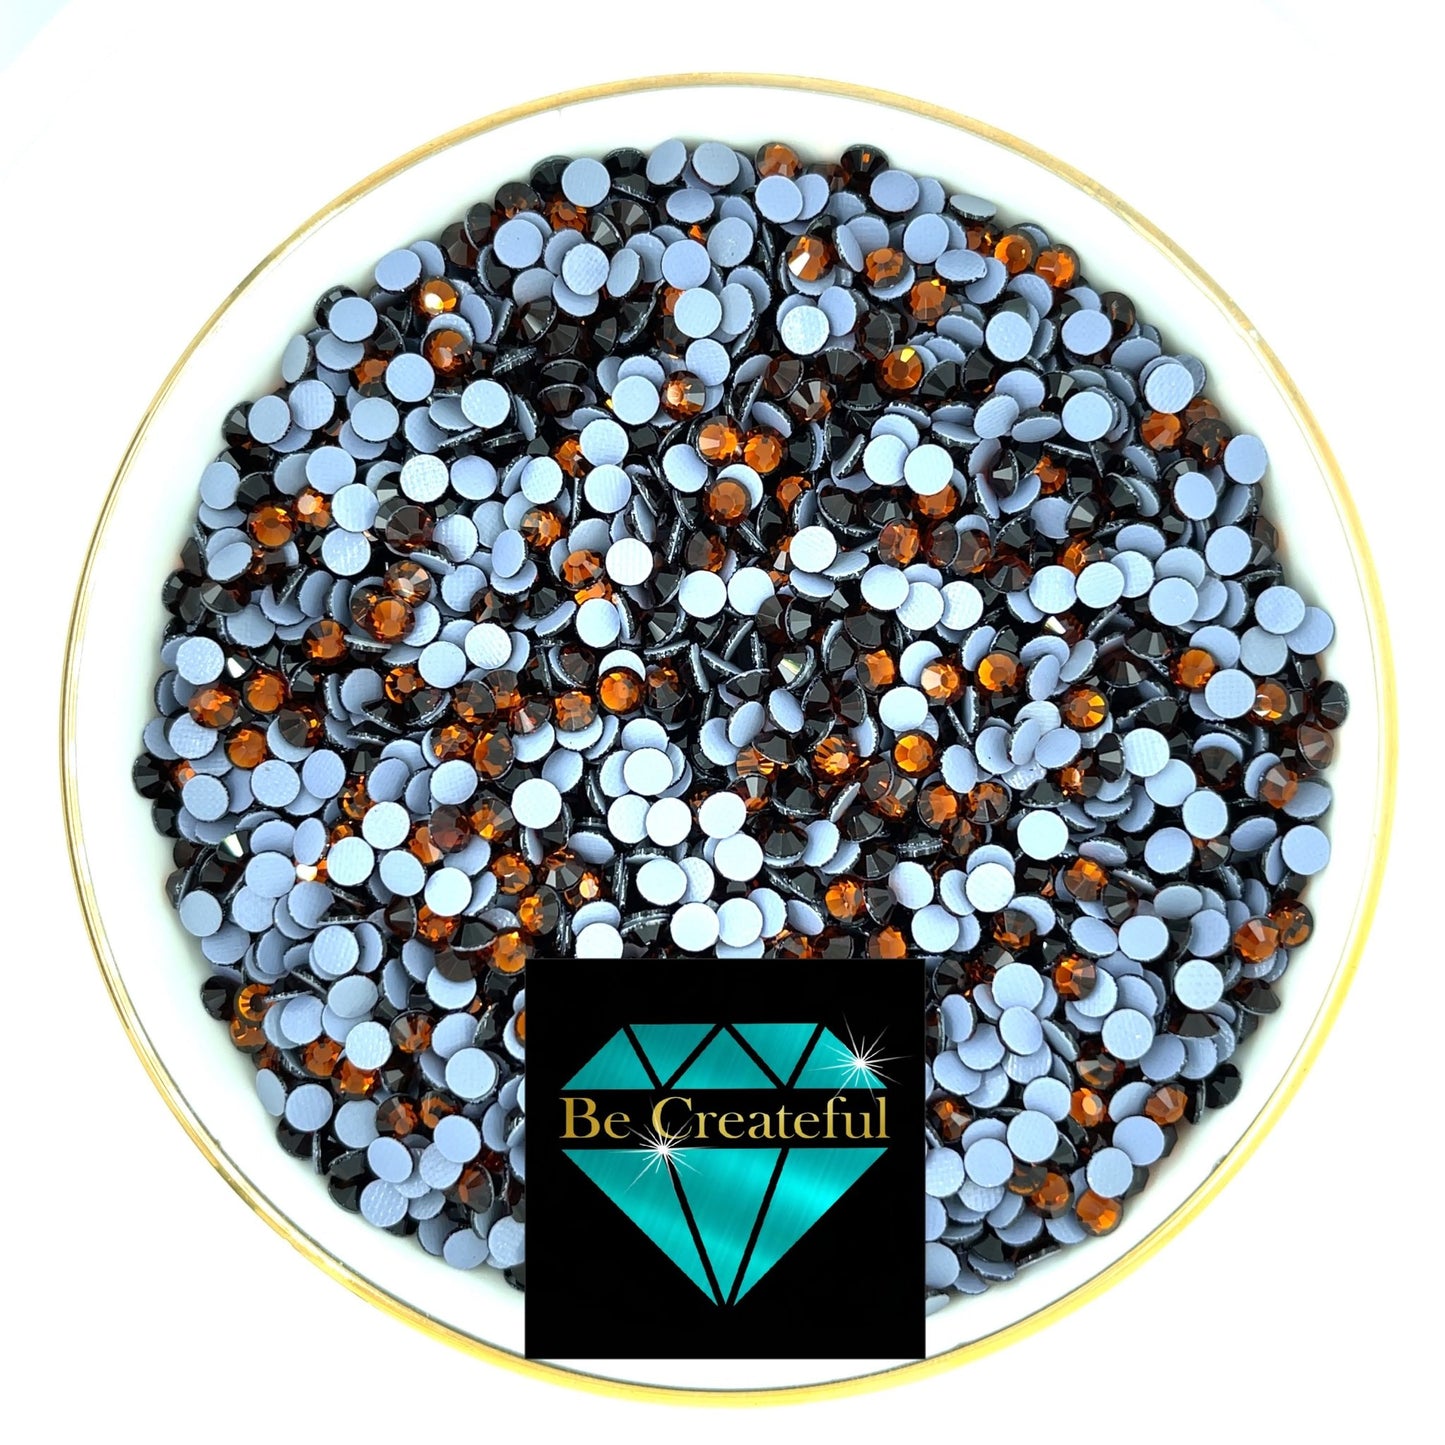 LUXE® Coffee Dark Topaz Glass Hotfix Rhinestones are high-quality 14-16 facet glass Rhinestones that provide intense sparkle